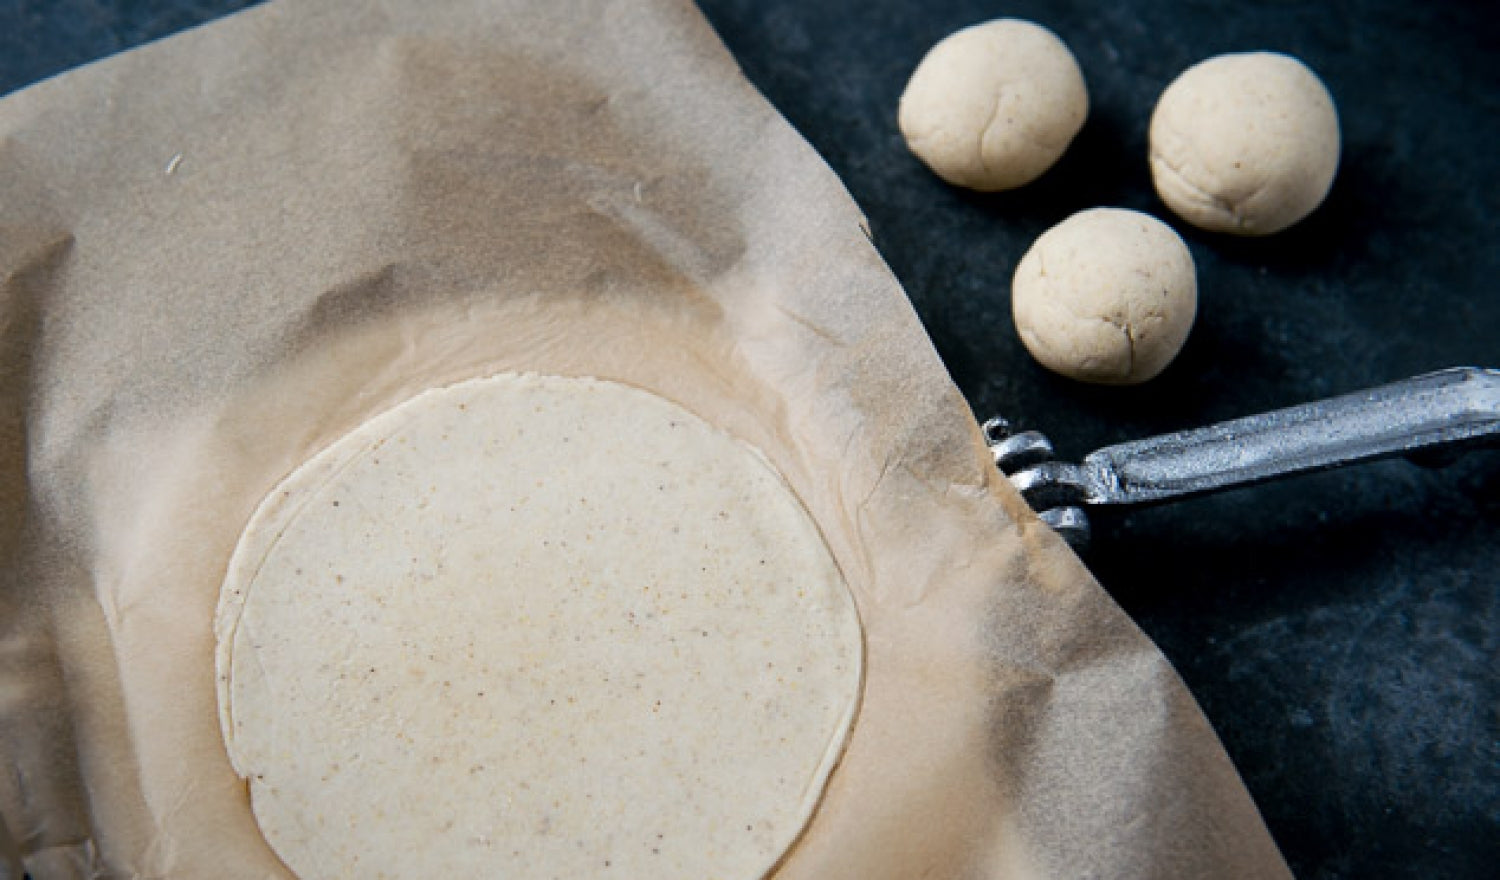 at retfærdiggøre Modregning pædagog How To Make Corn Tortillas Using A Tortilla Press | Sous Chef UK